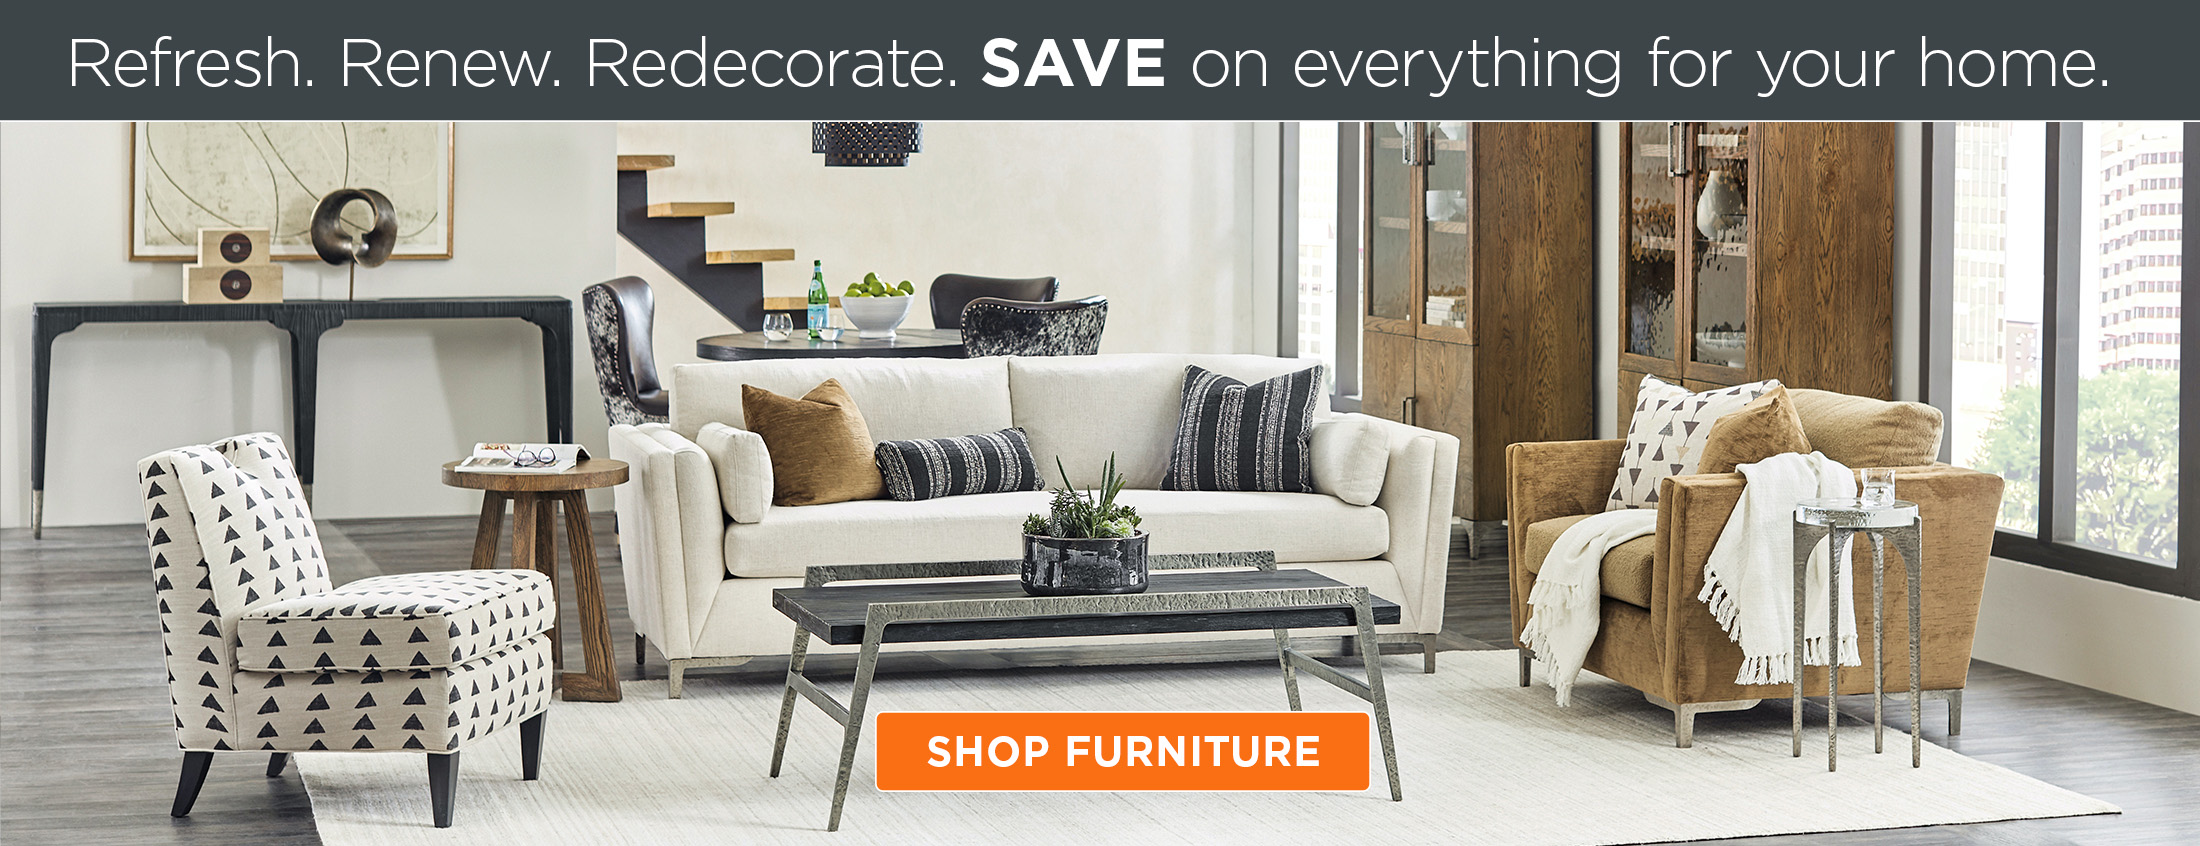 Homethreads Furniture & Decor Sale